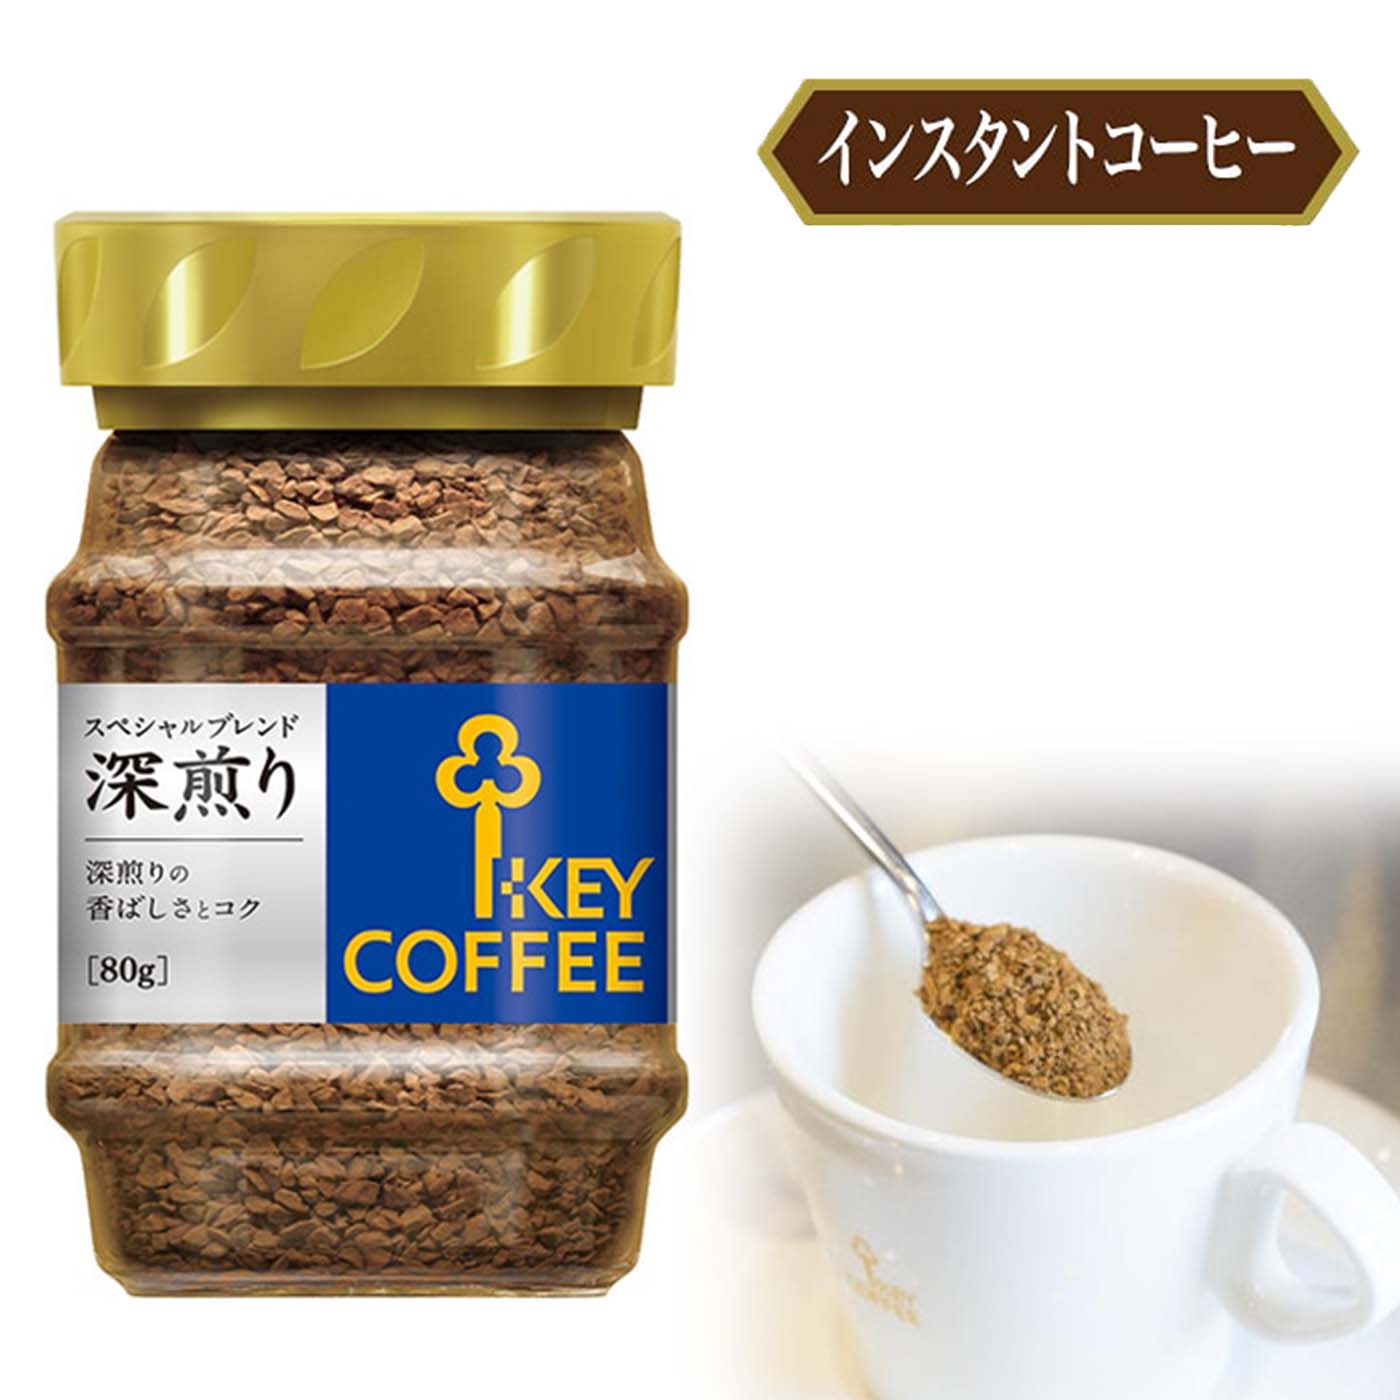 KEY COFFEE キーコーヒー インスタントコーヒー スペシャルブレンド 深煎り 瓶 80g×3個